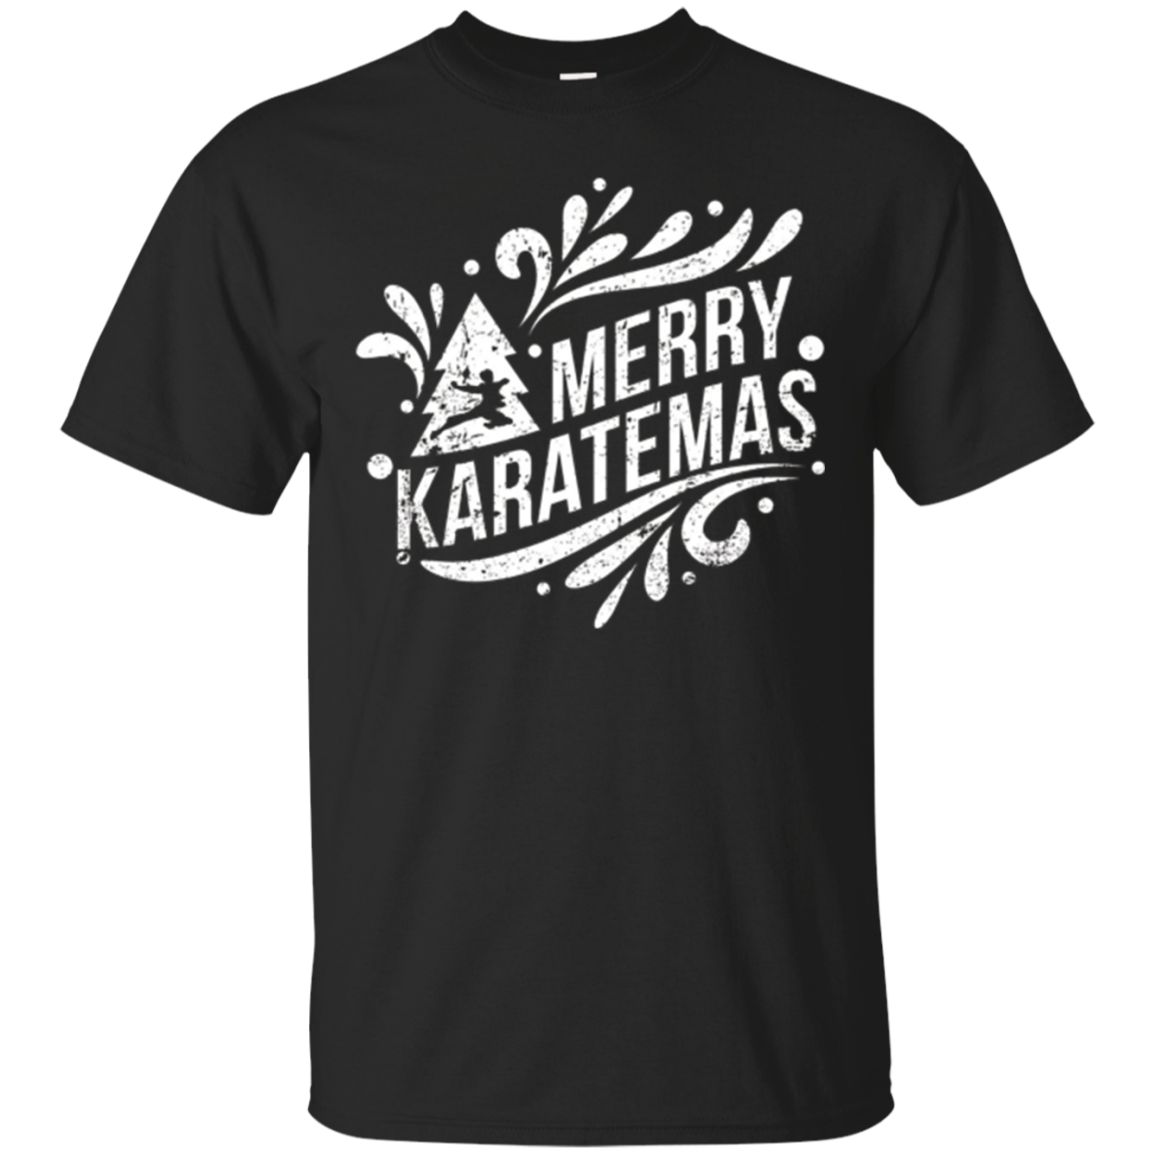 Shop From 1000 Unique Christmas Karate T-shirt Martial Arts Fans - Merry Karatemas